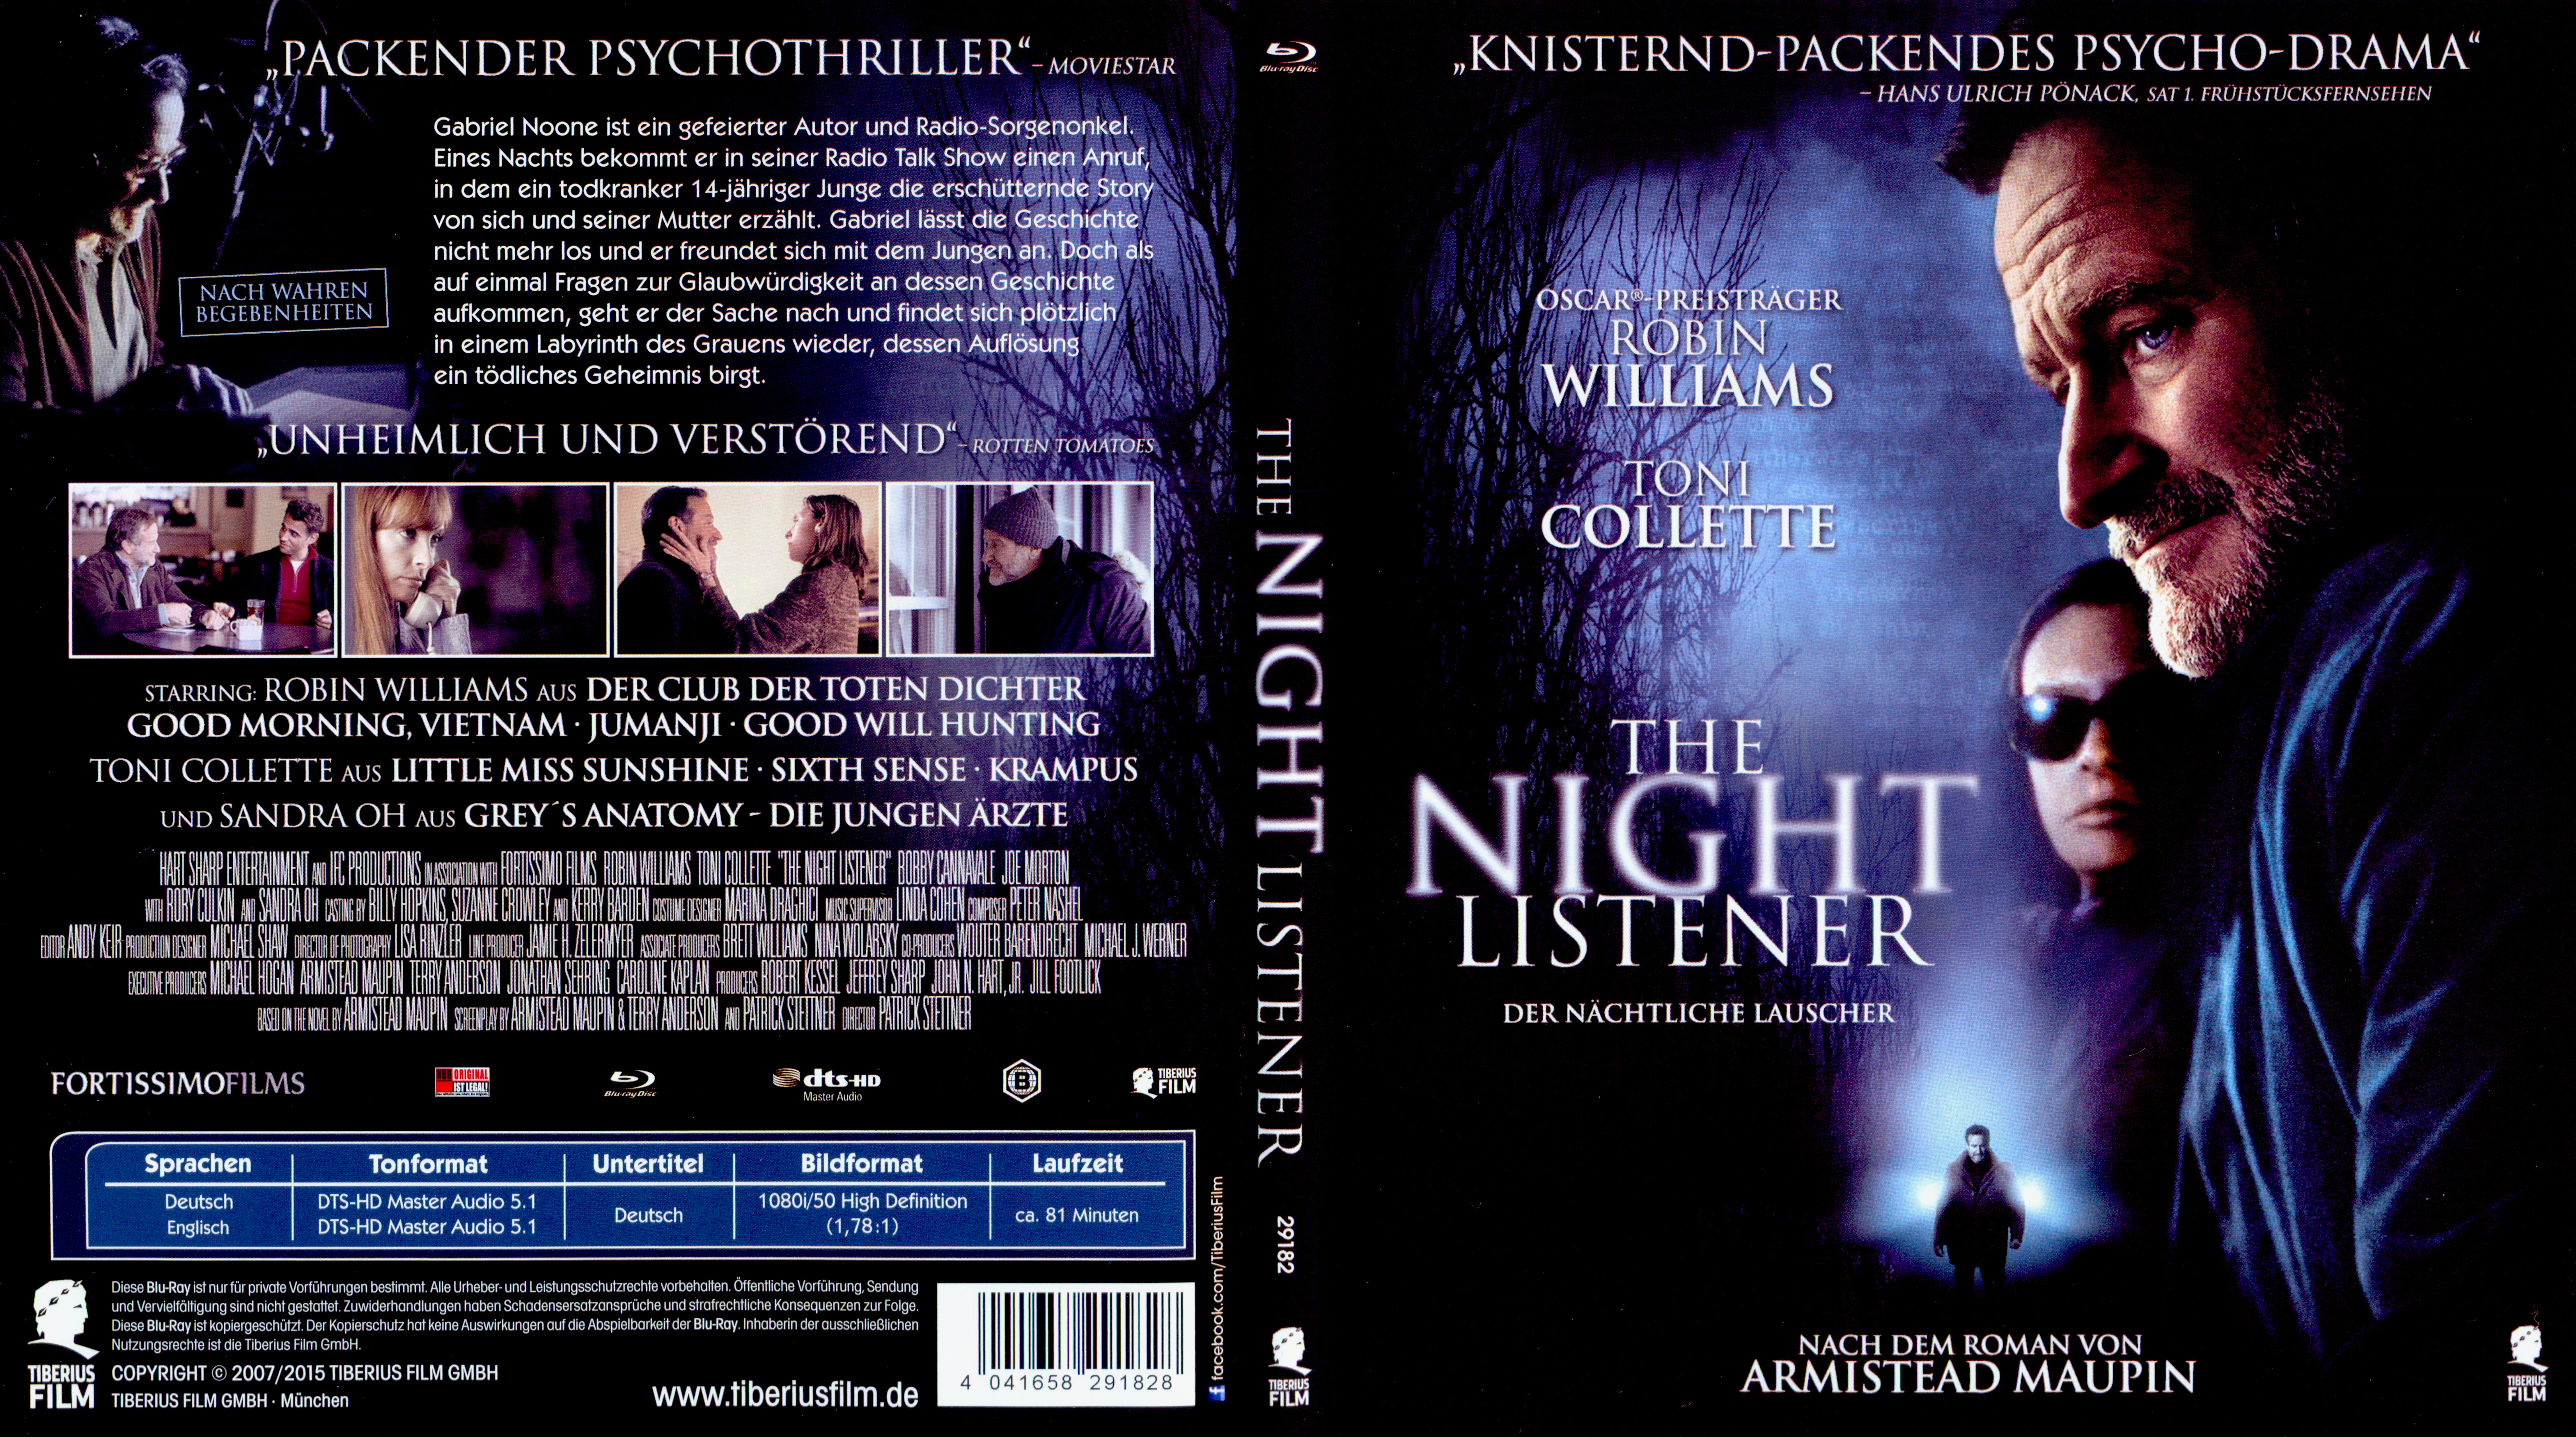 The Night Listener #10